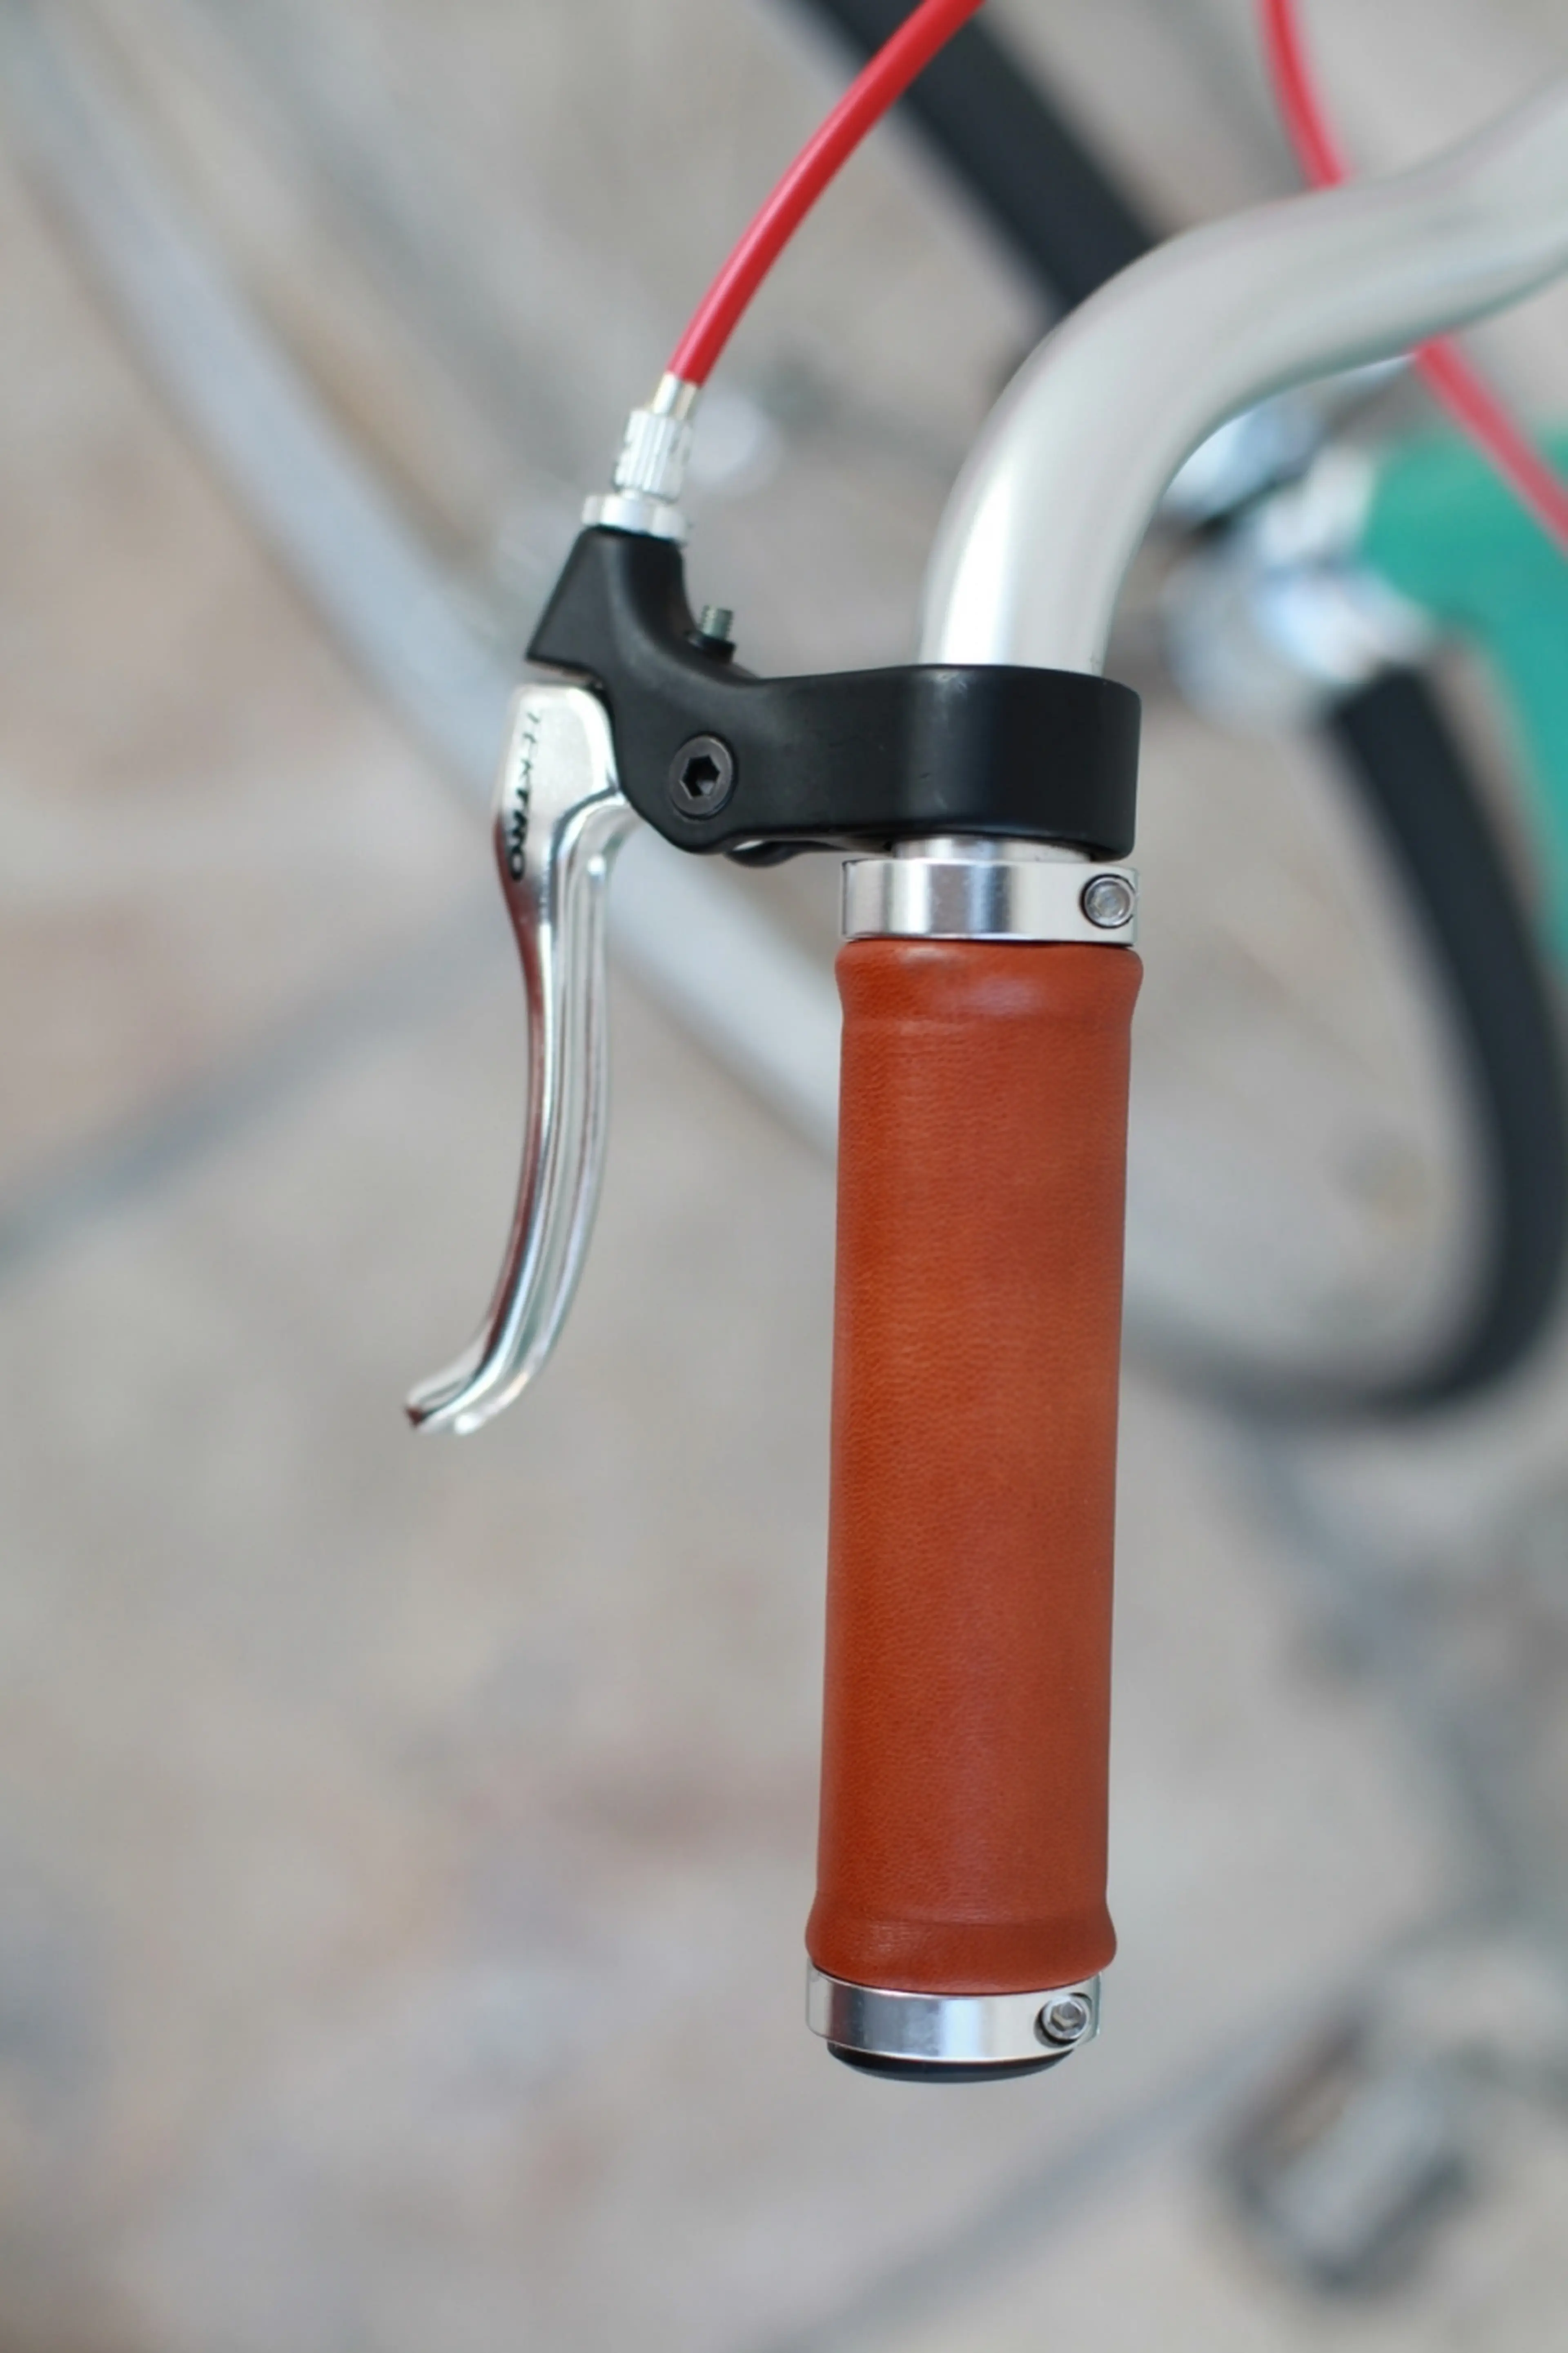 2. Mansoane ghidon bicicleta lock-on piele naturala